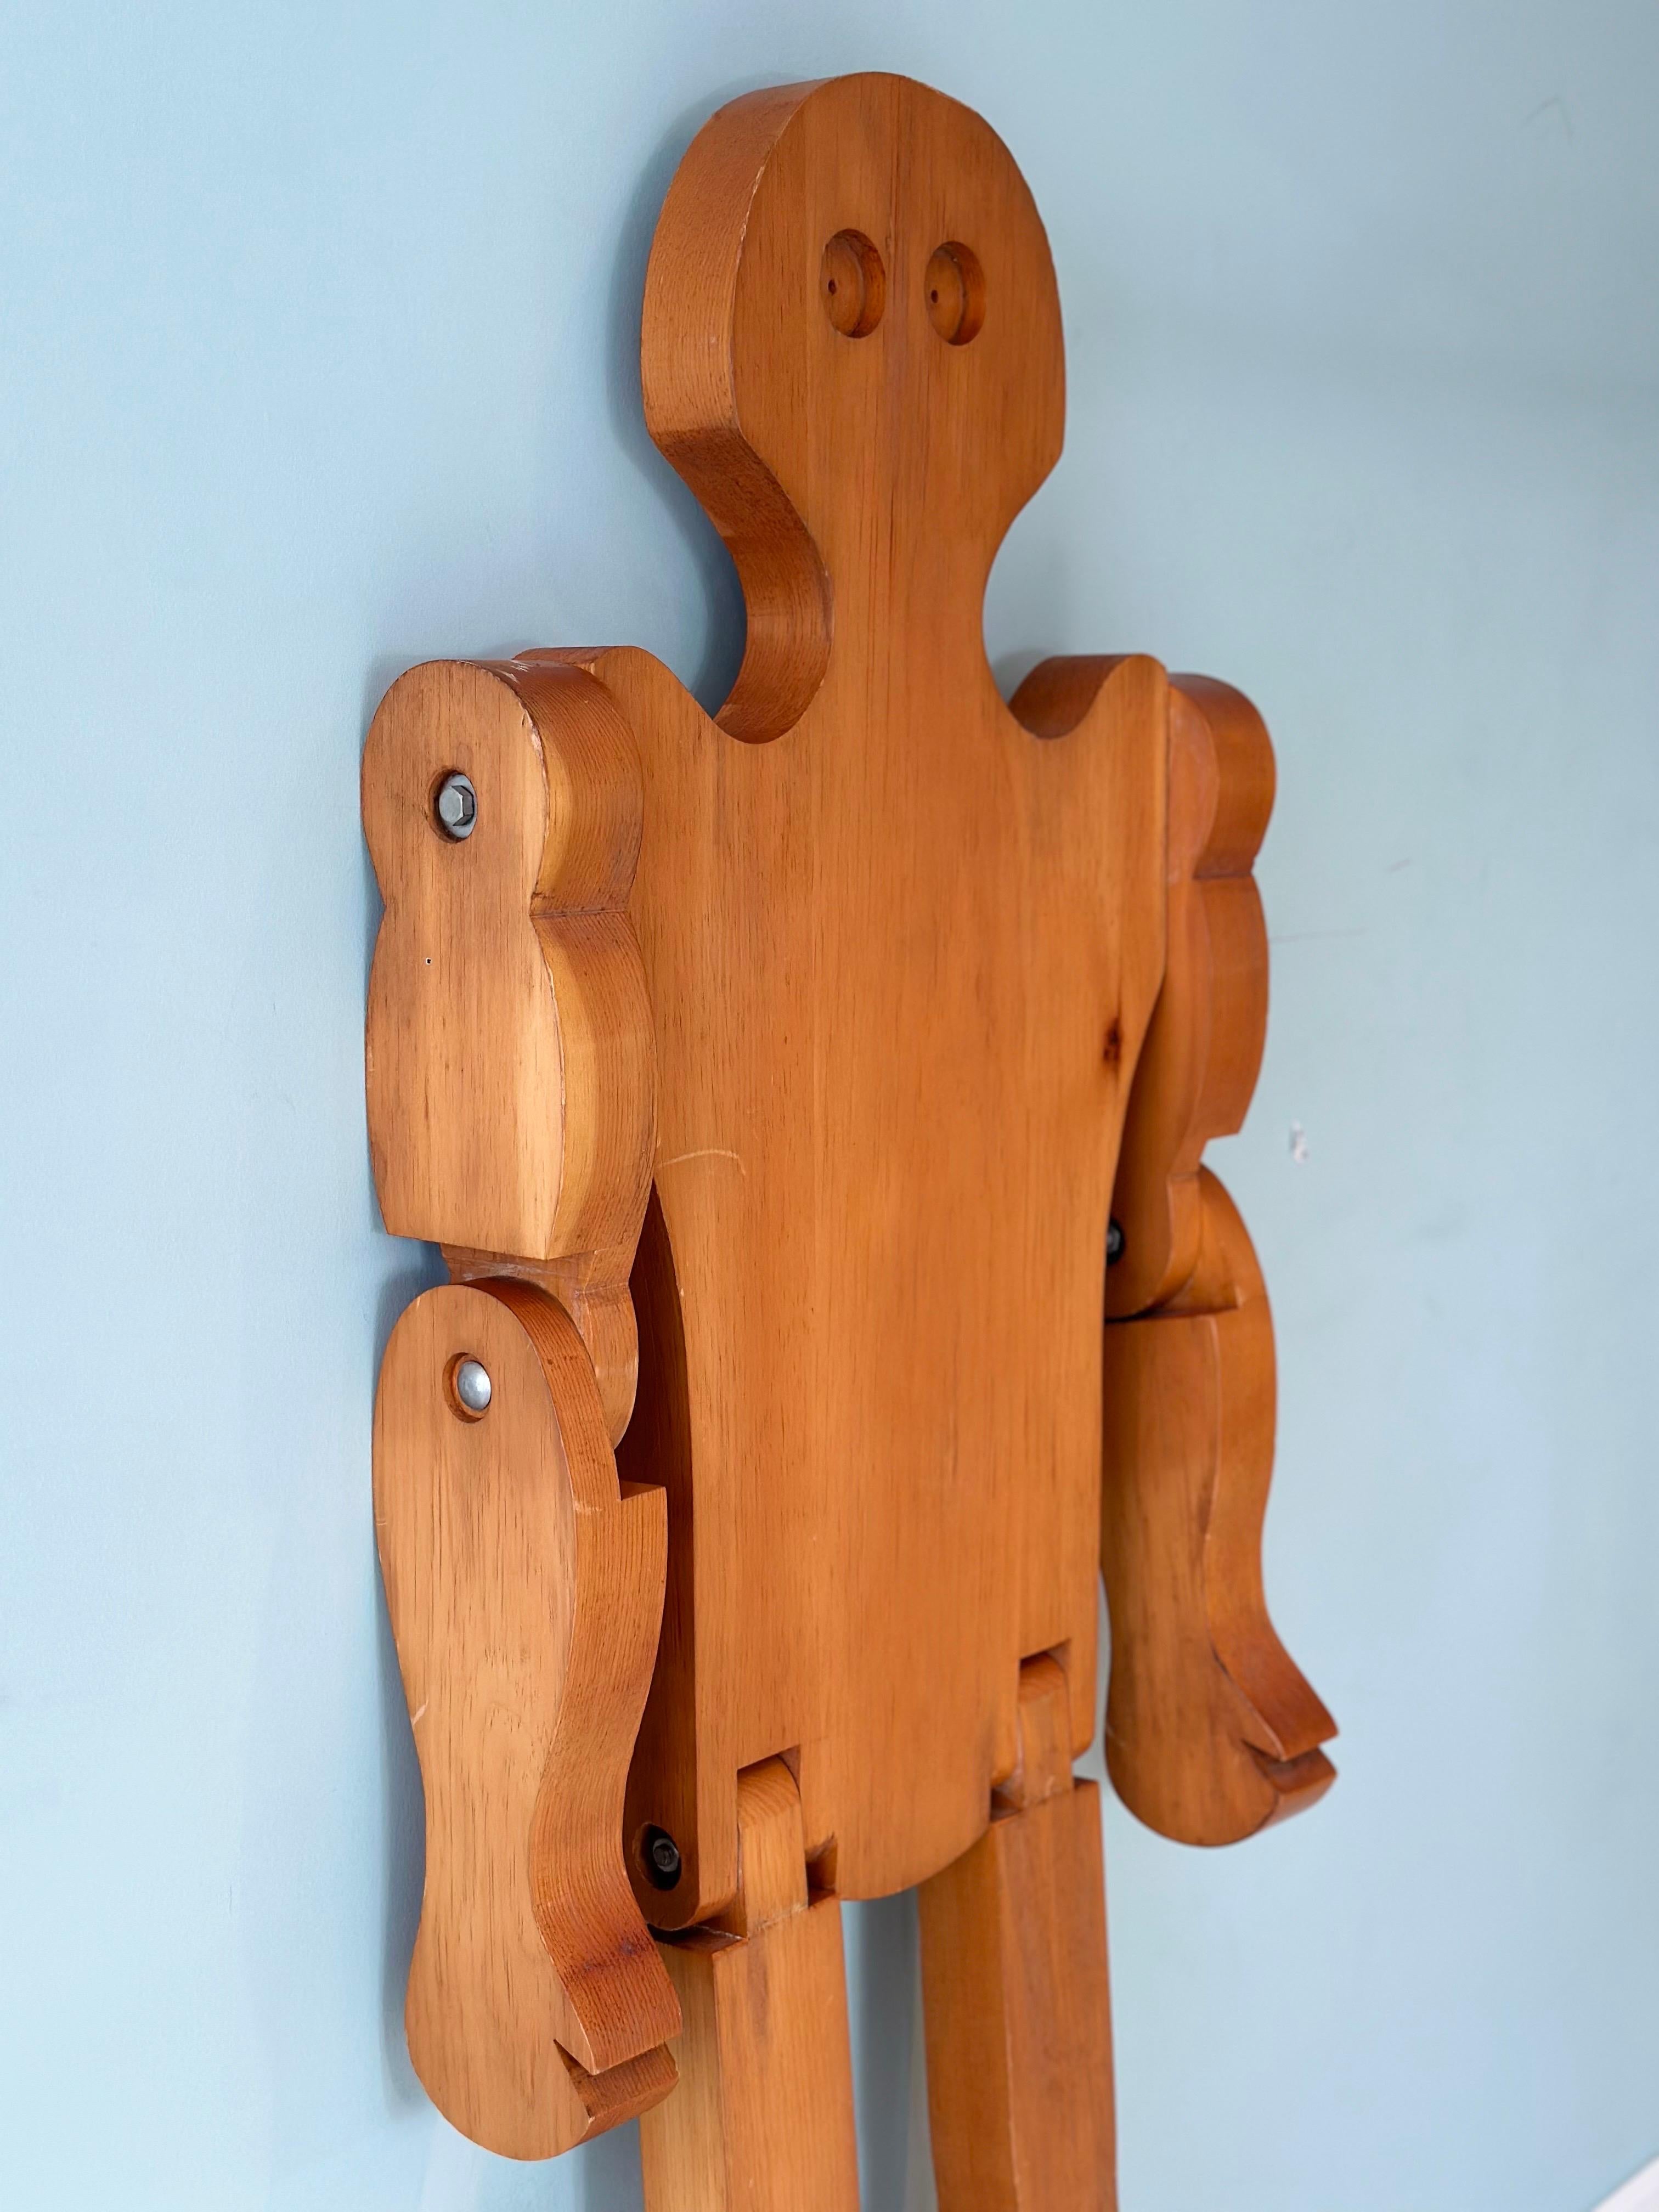 Hardwood Mid-Century American Folk Art Wood Articulated Man Figure For Sale